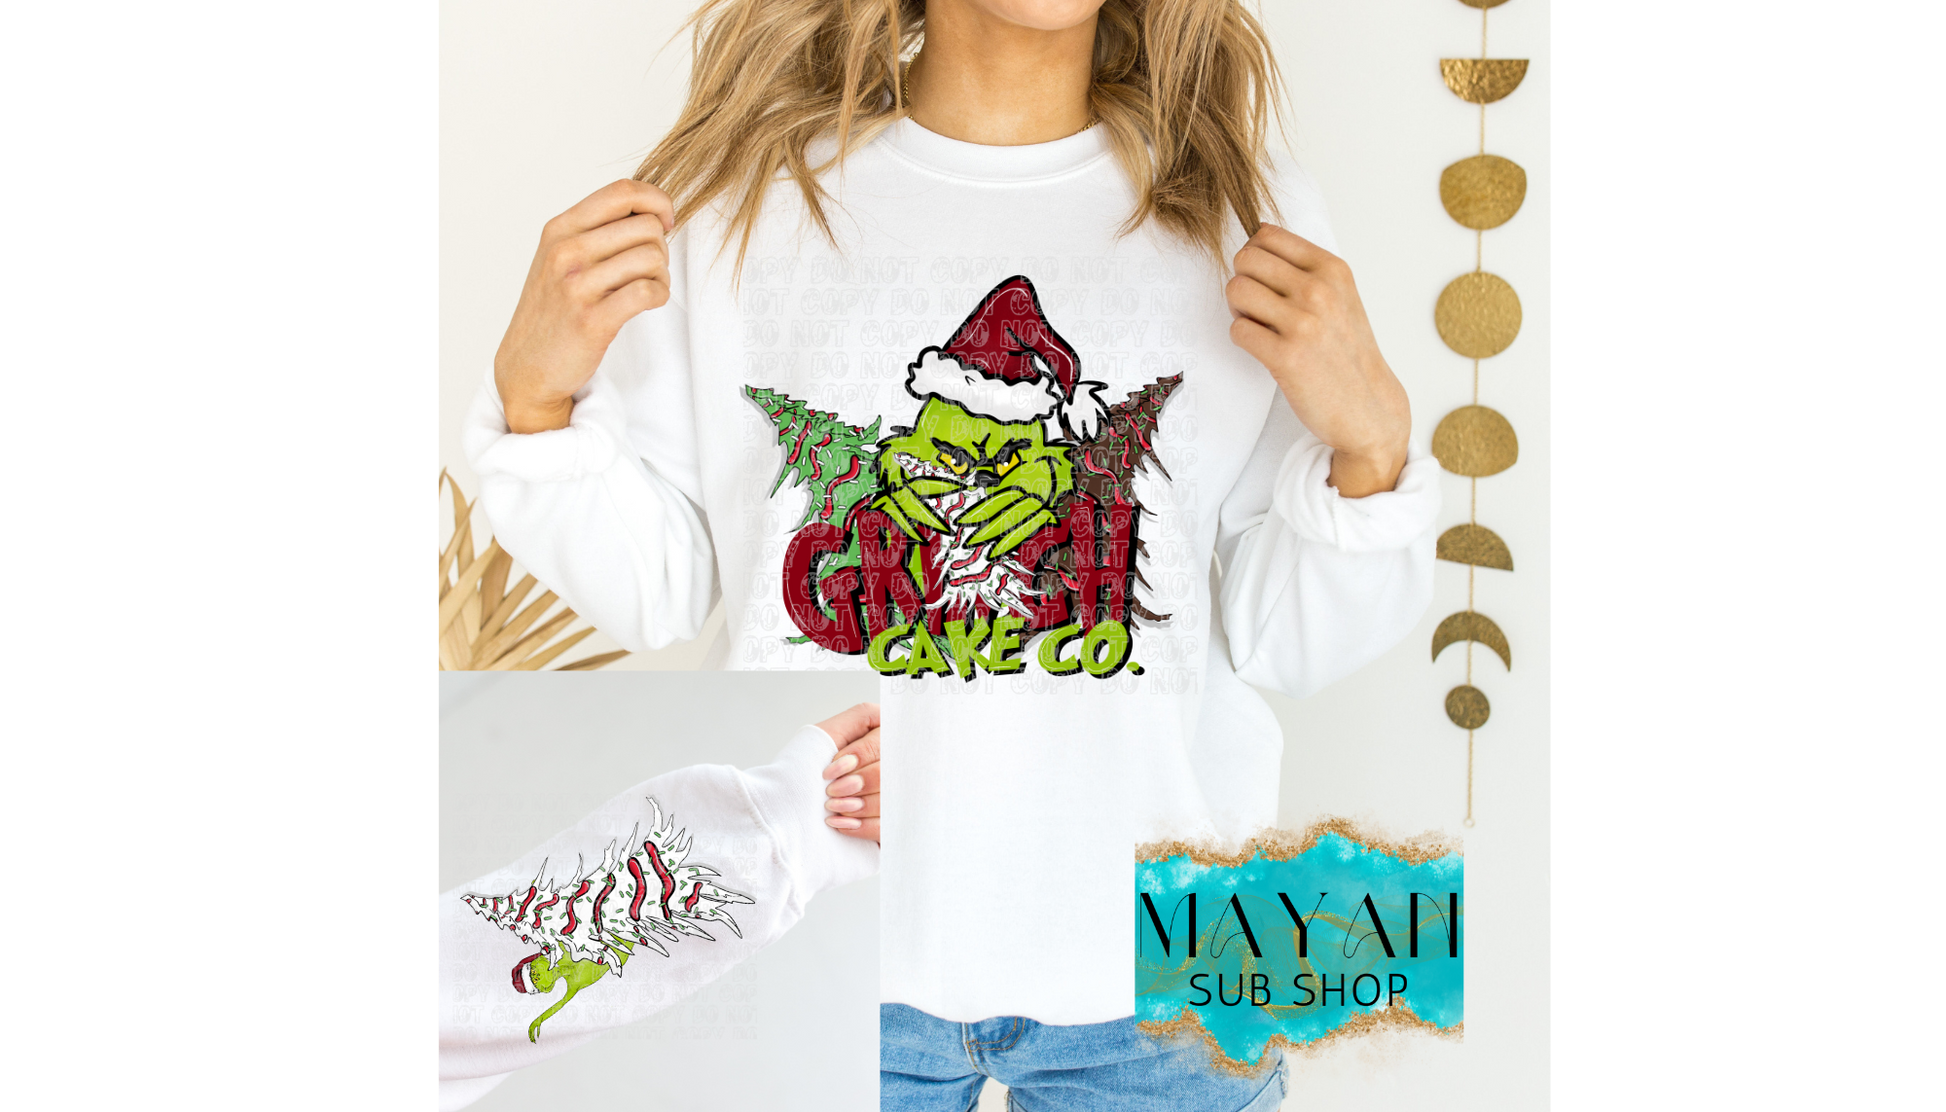 Christmas Cake Co. Sweatshirt - Mayan Sub Shop